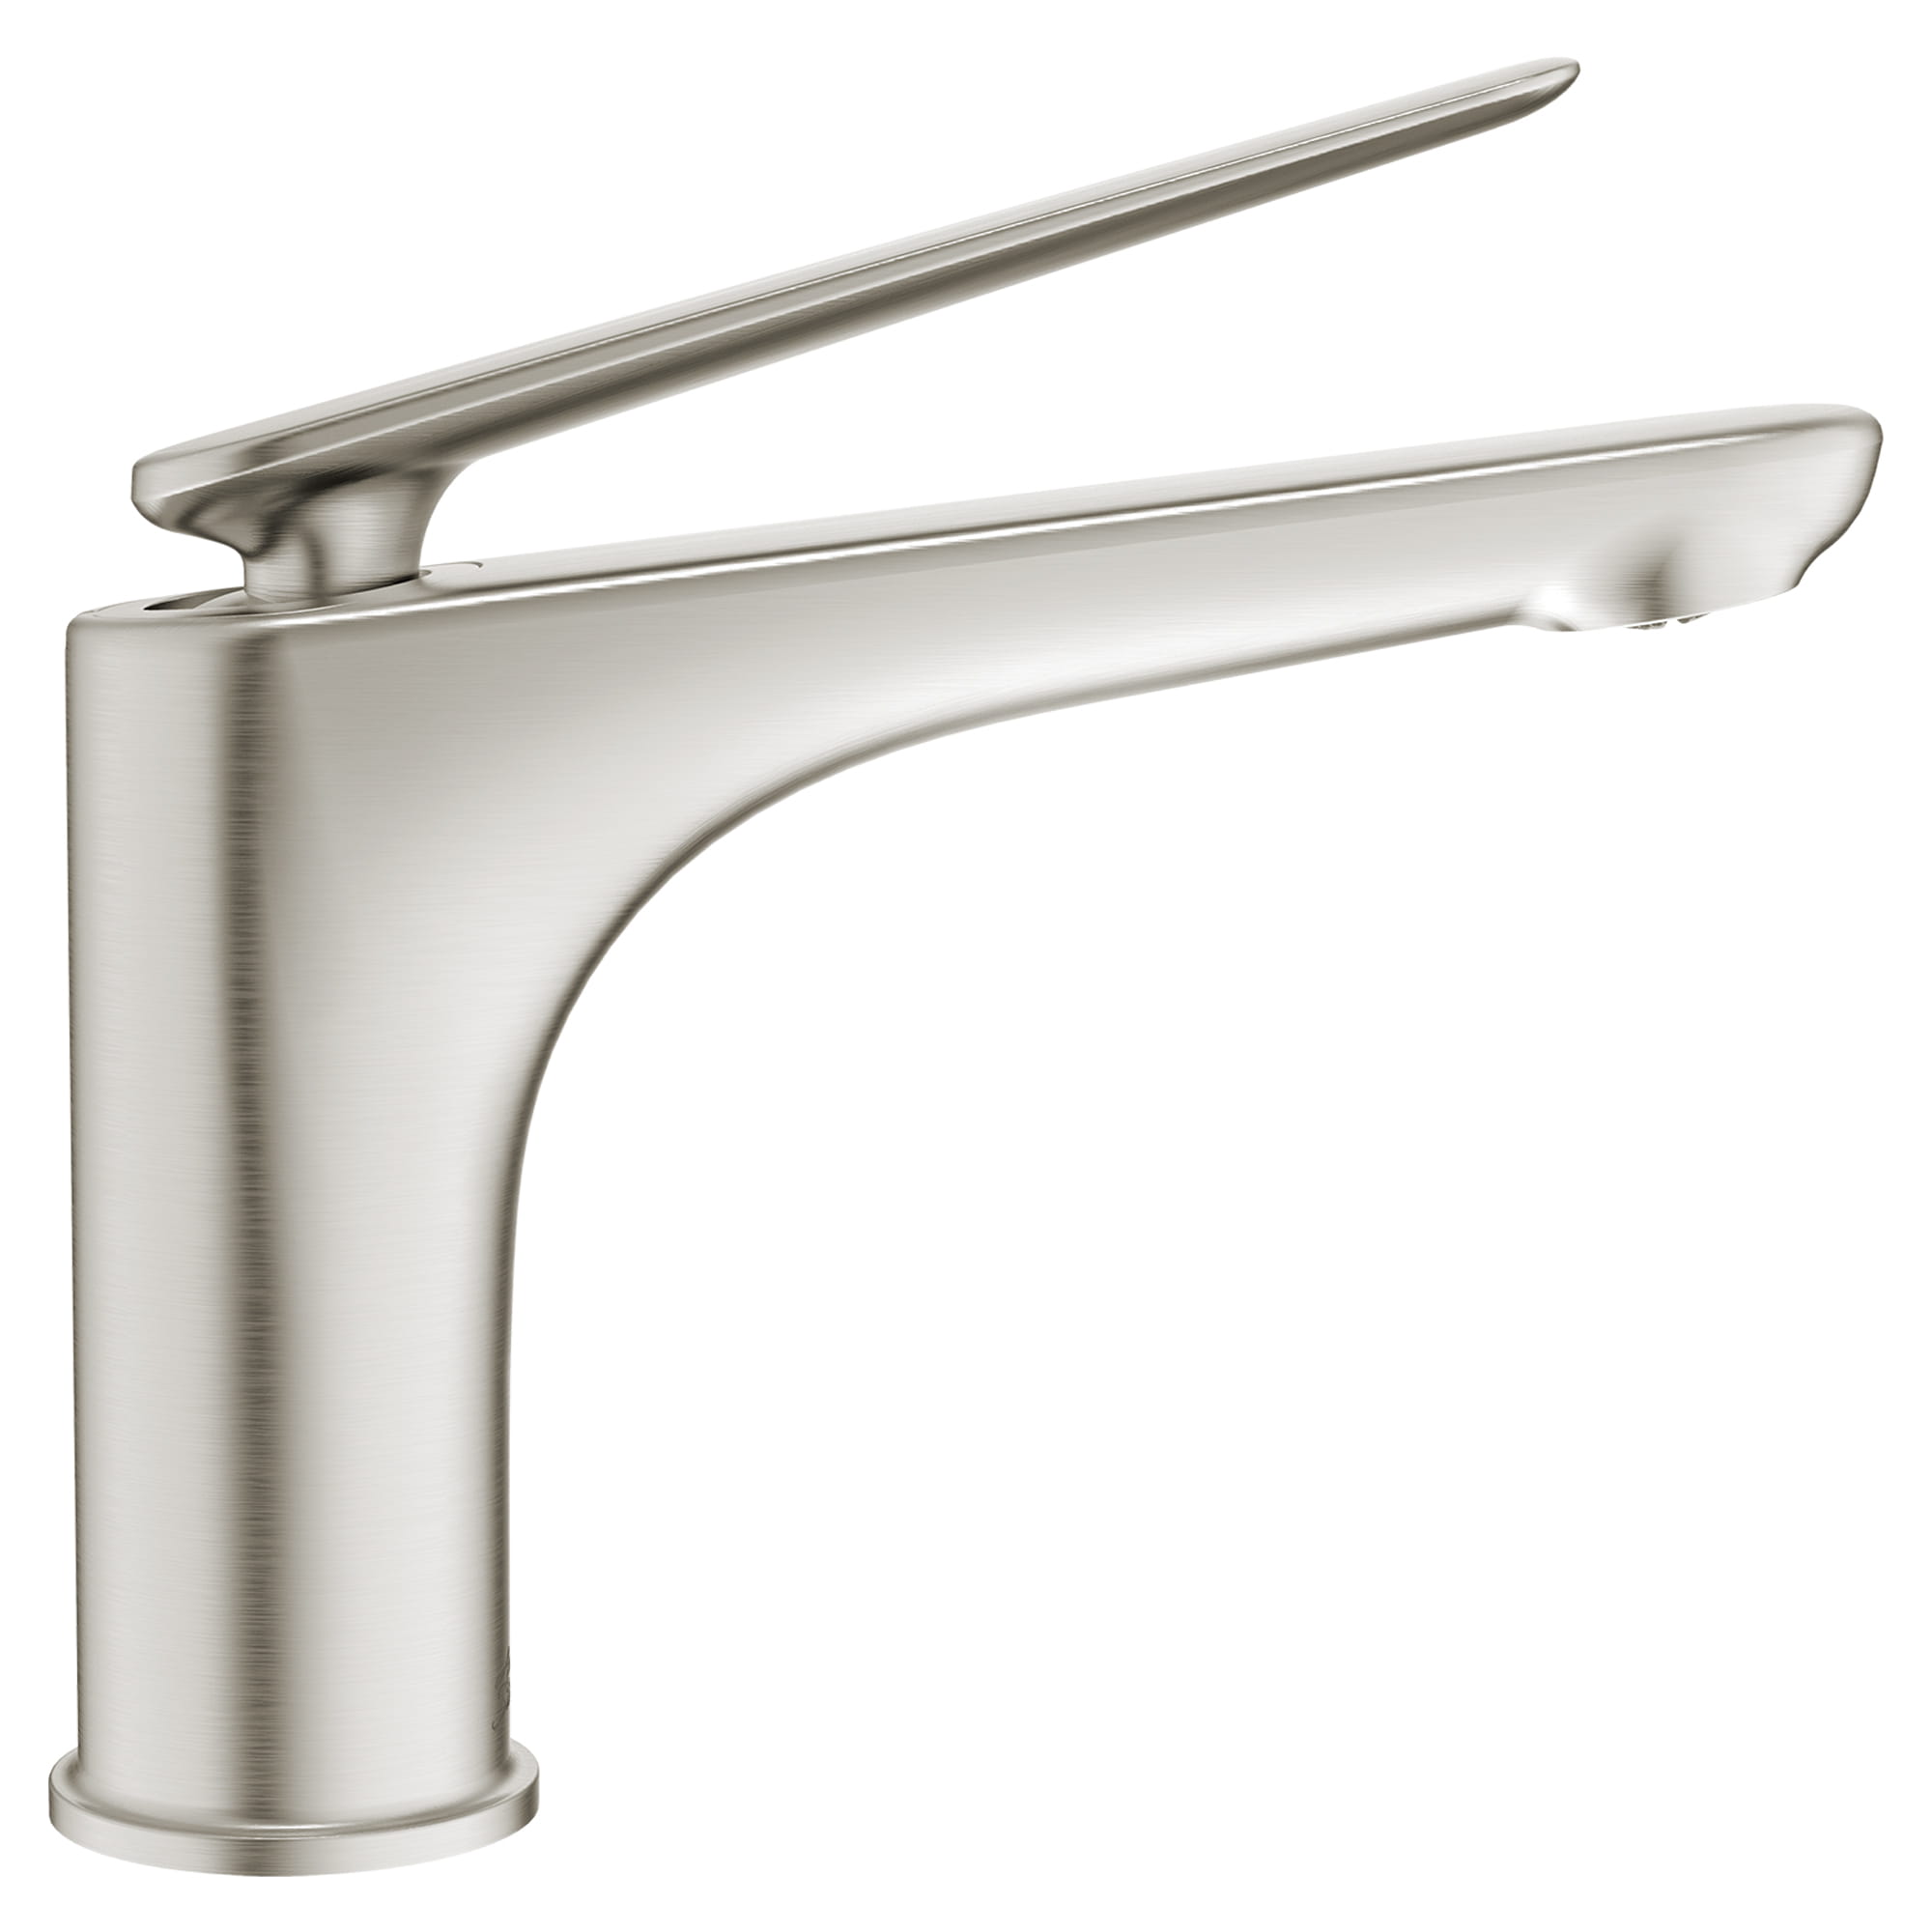 Studio® S Single Hole Lever Handle Bathroom Faucet 1.2 gpm/ 4.5 L/min